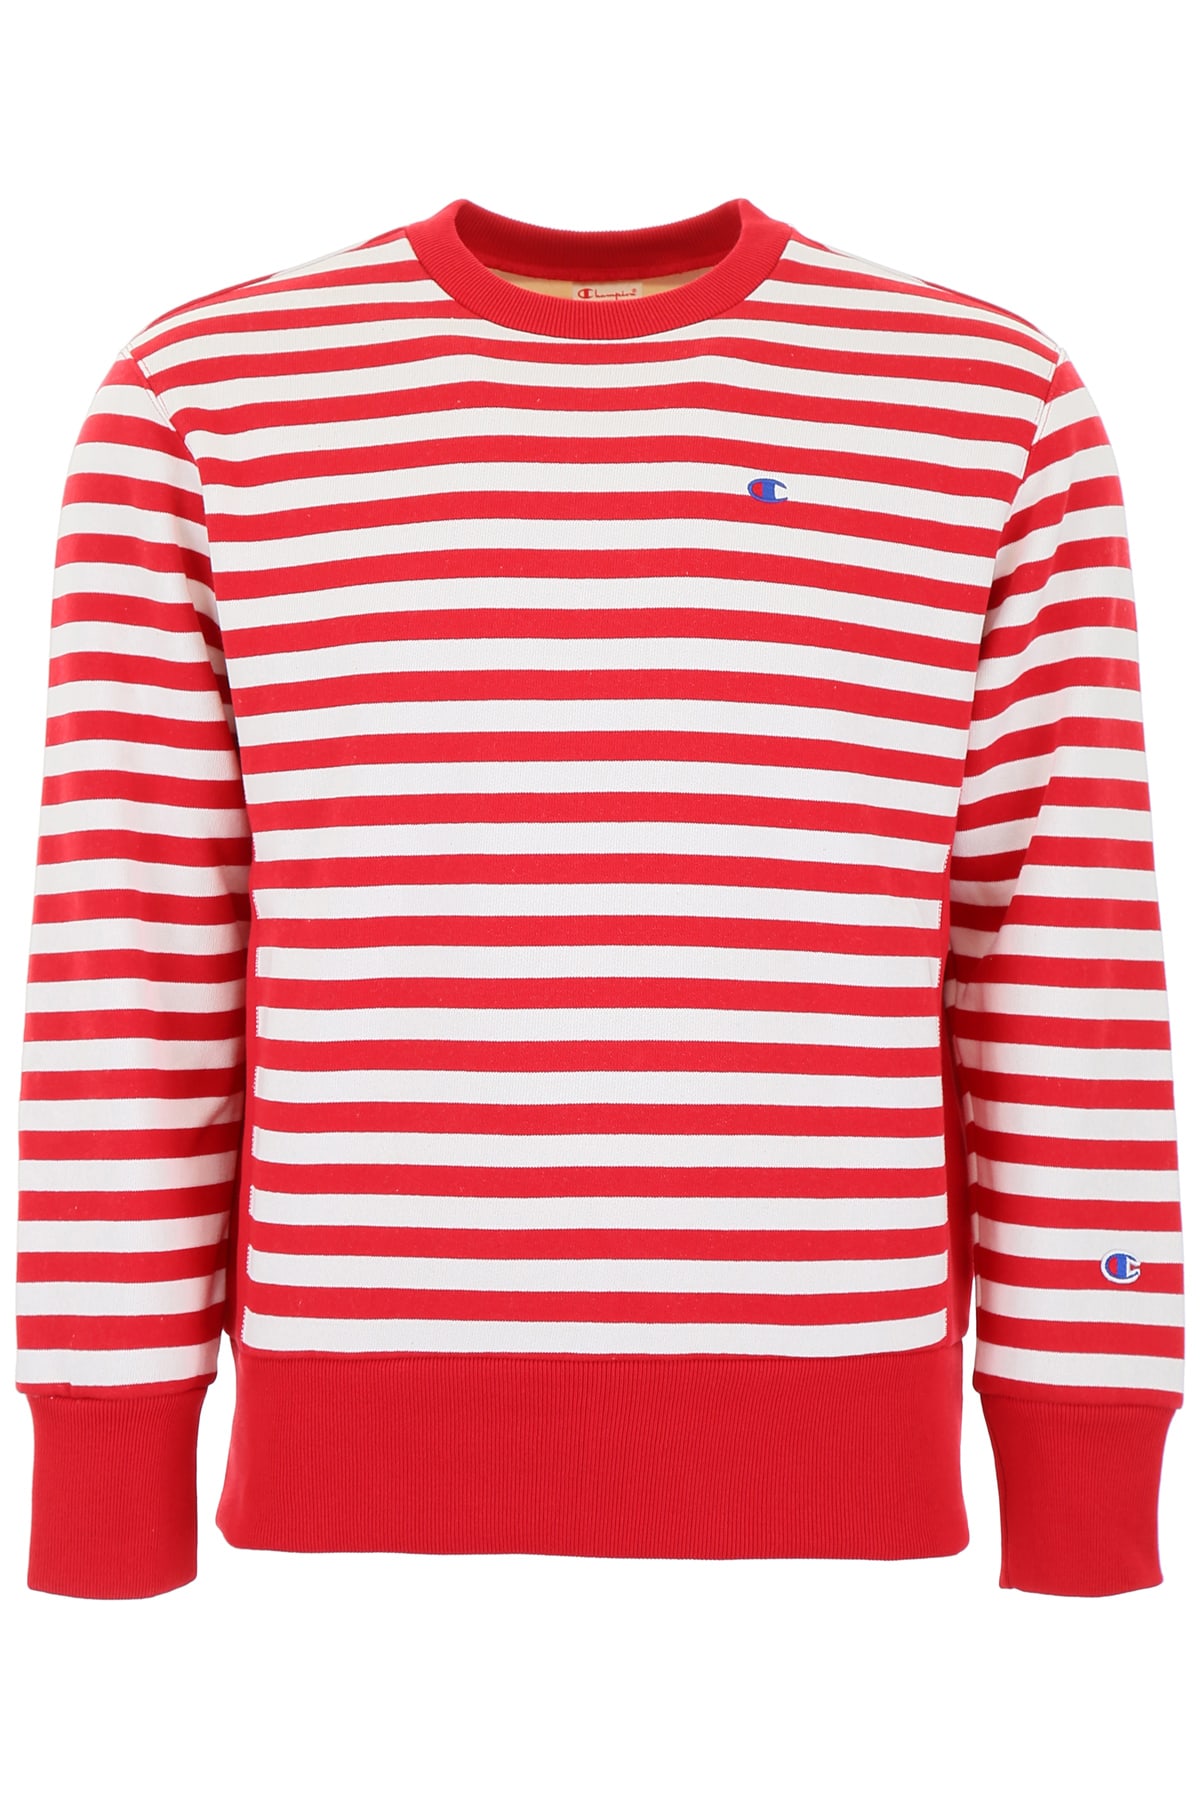 red white and blue champion sweatshirt